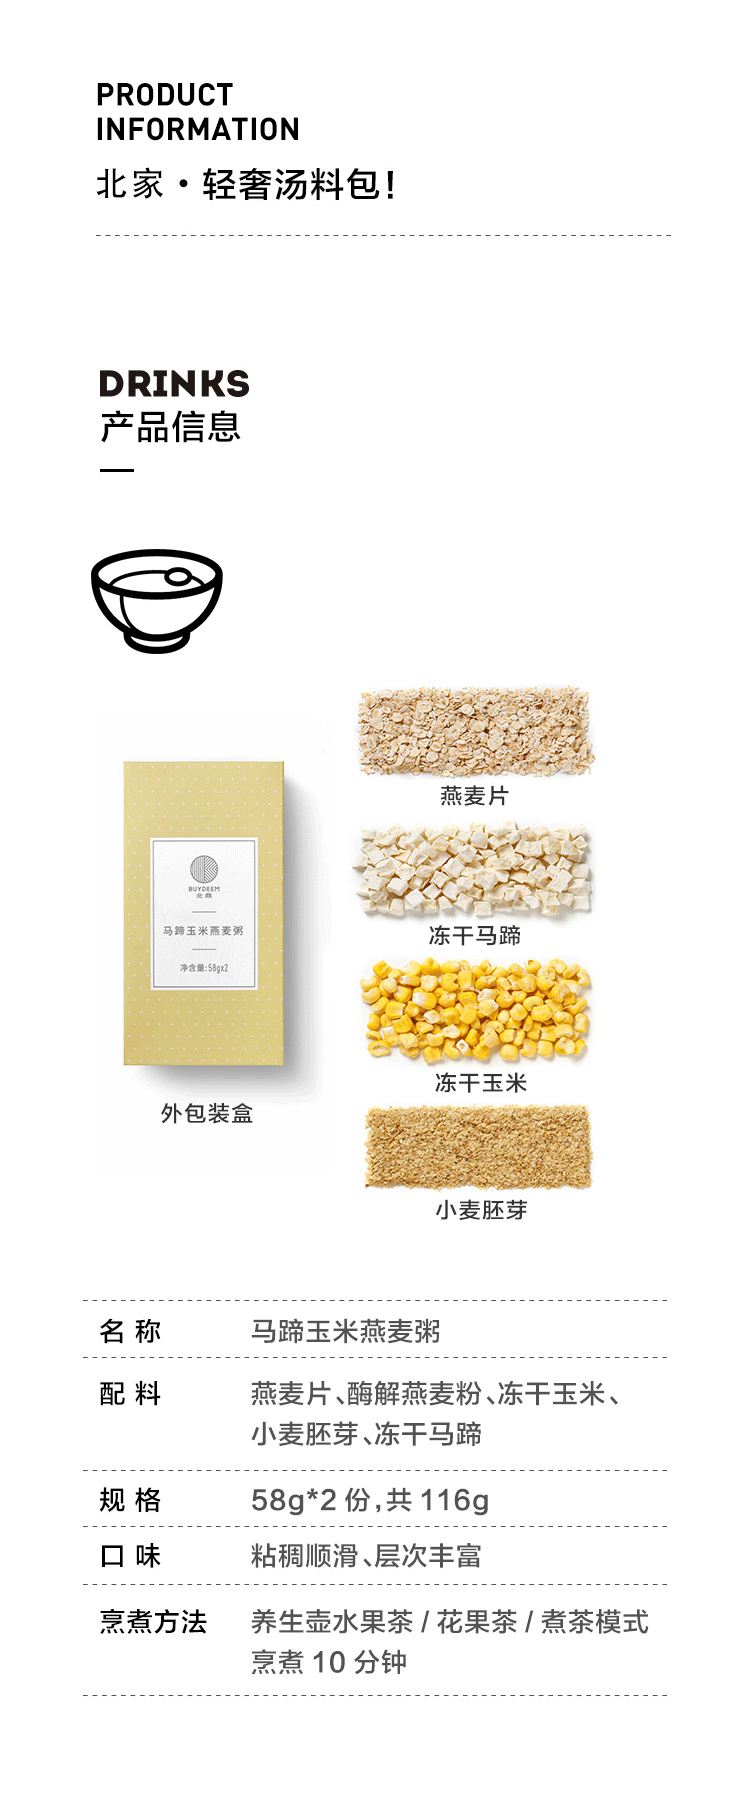 Eleocharis Corn Oatmeal 2 bags